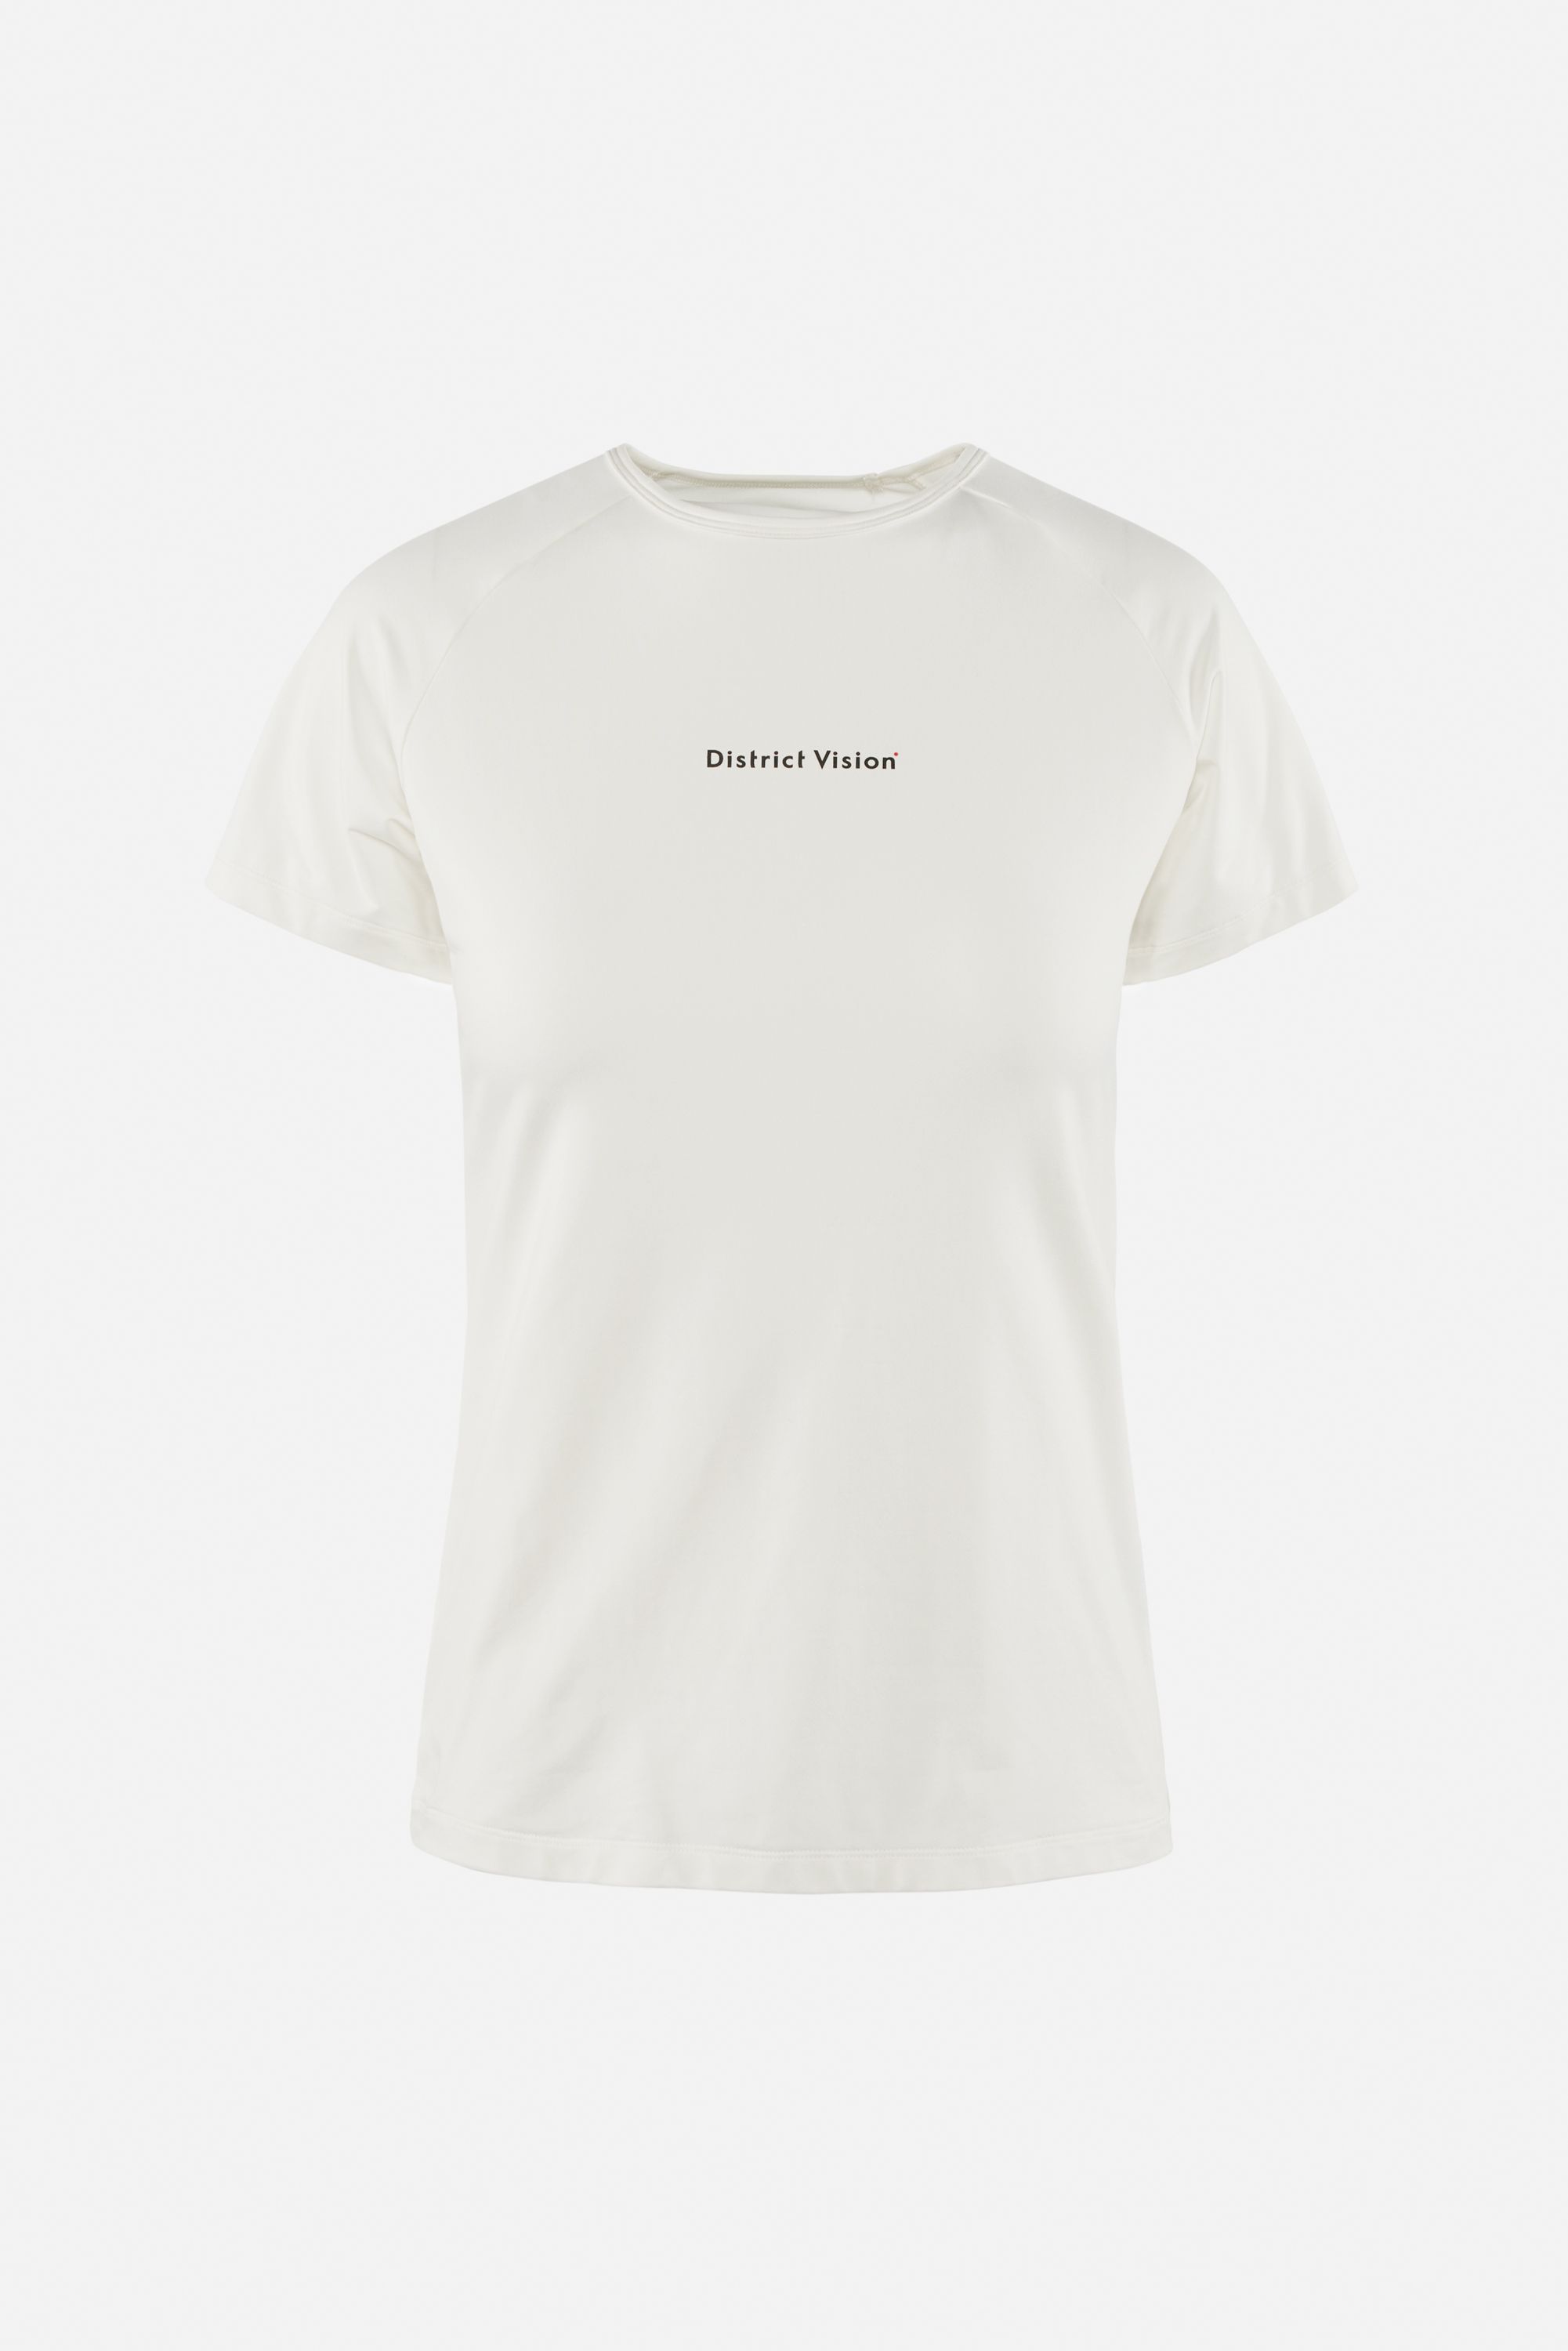 Deva Short Sleeve T-Shirt, Lunar White